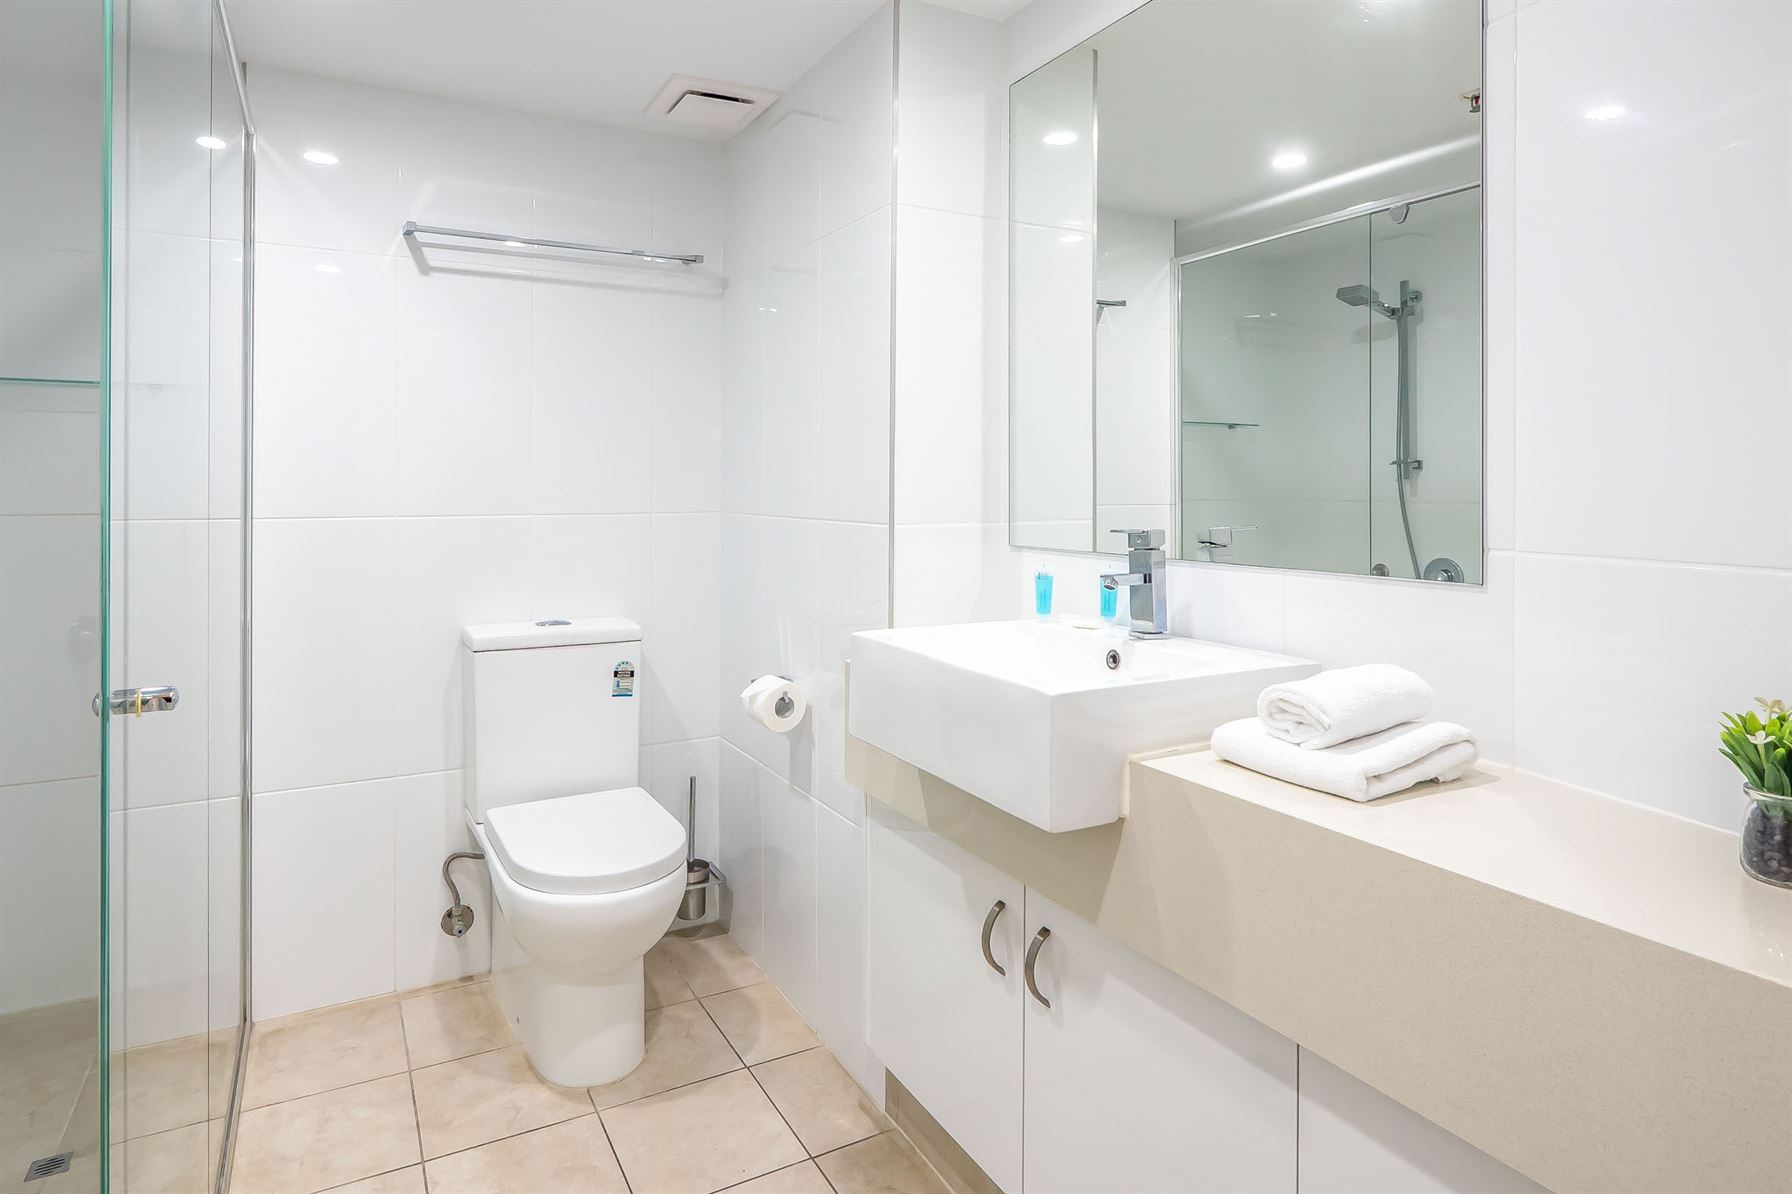 Victoria Square Apartments accommodation bathroom Unit 51